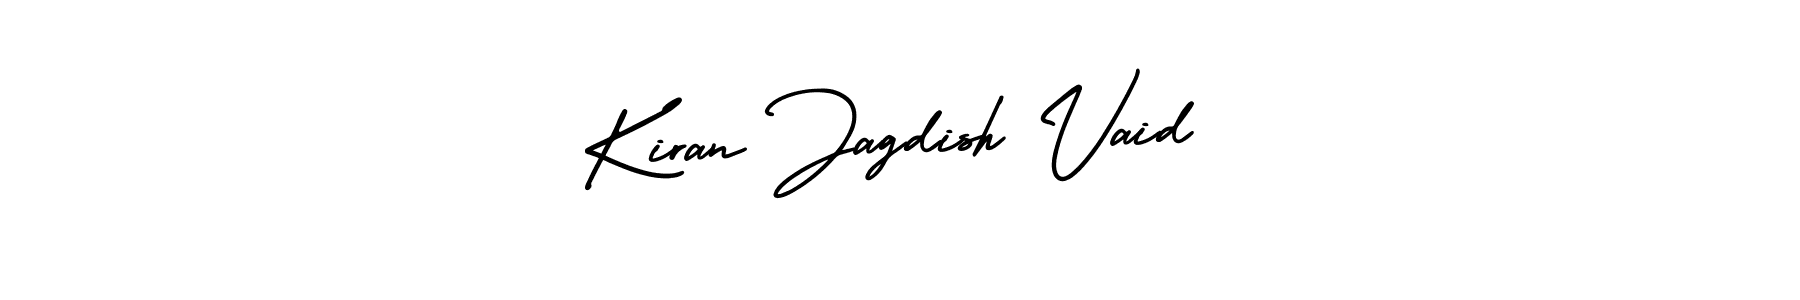 How to Draw Kiran Jagdish Vaid signature style? AmerikaSignatureDemo-Regular is a latest design signature styles for name Kiran Jagdish Vaid. Kiran Jagdish Vaid signature style 3 images and pictures png